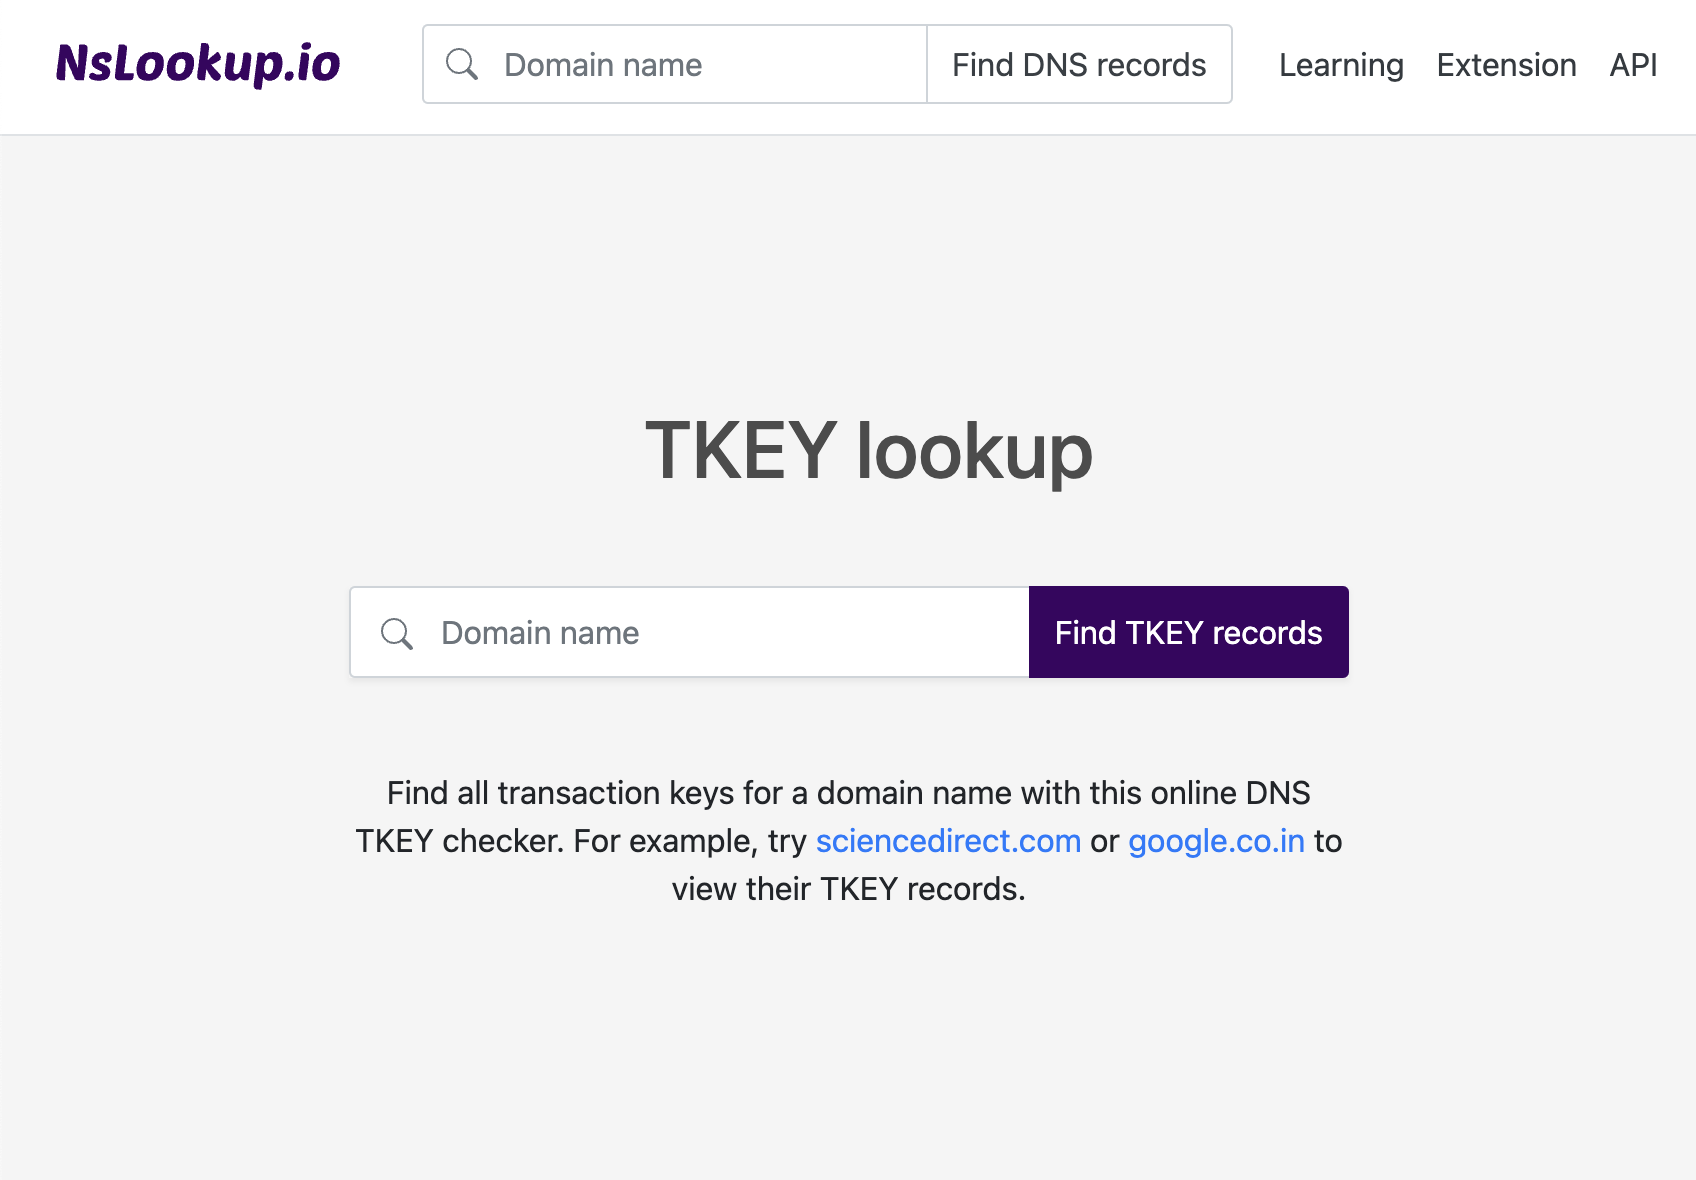 Open the TKEY lookup tool